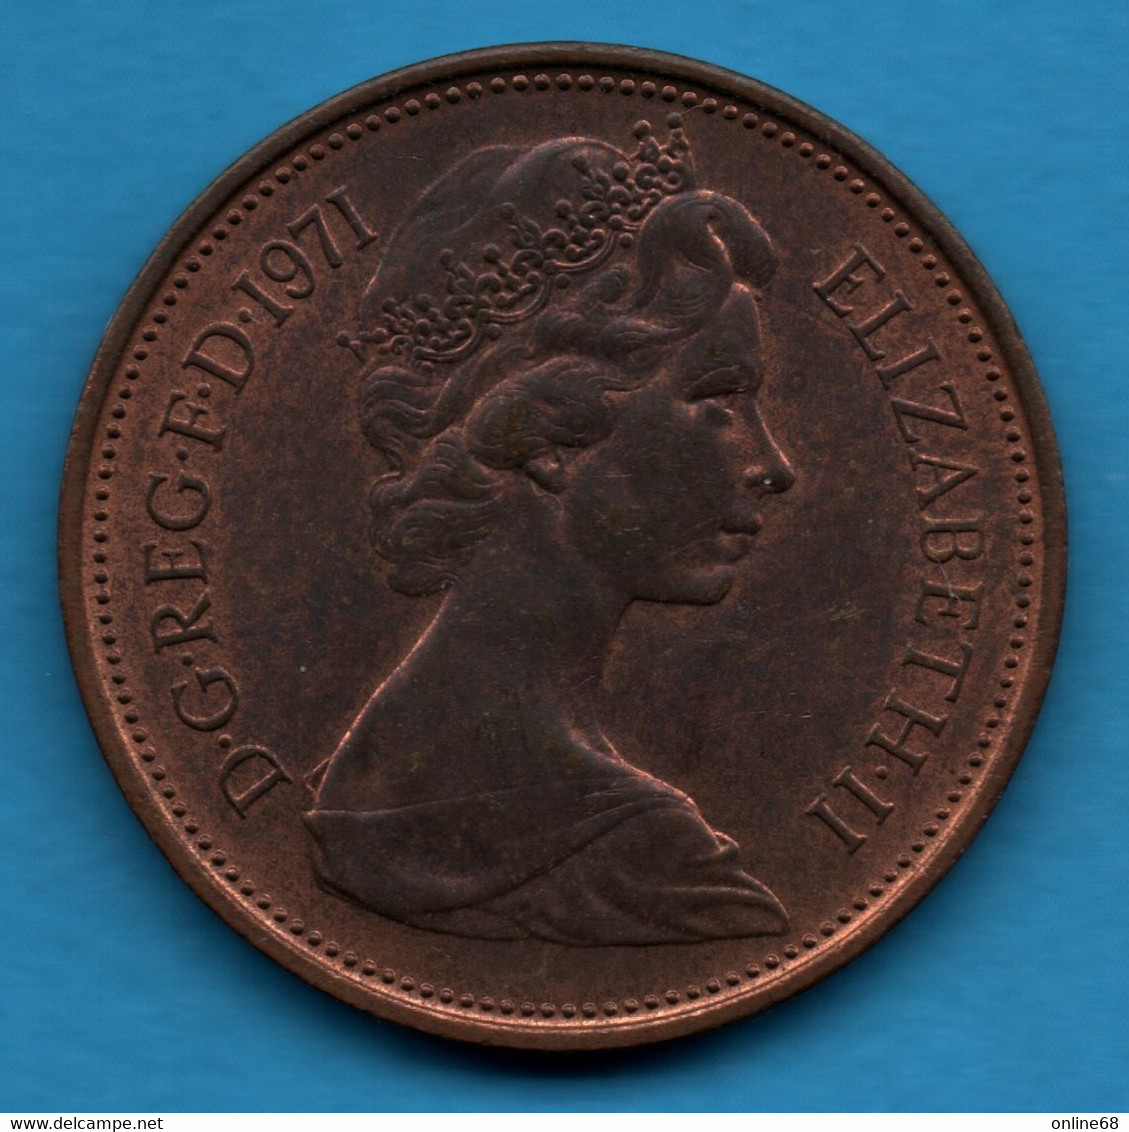 UK 2 NEW PENCE 1971 KM# 916 QEII - 2 Pence & 2 New Pence